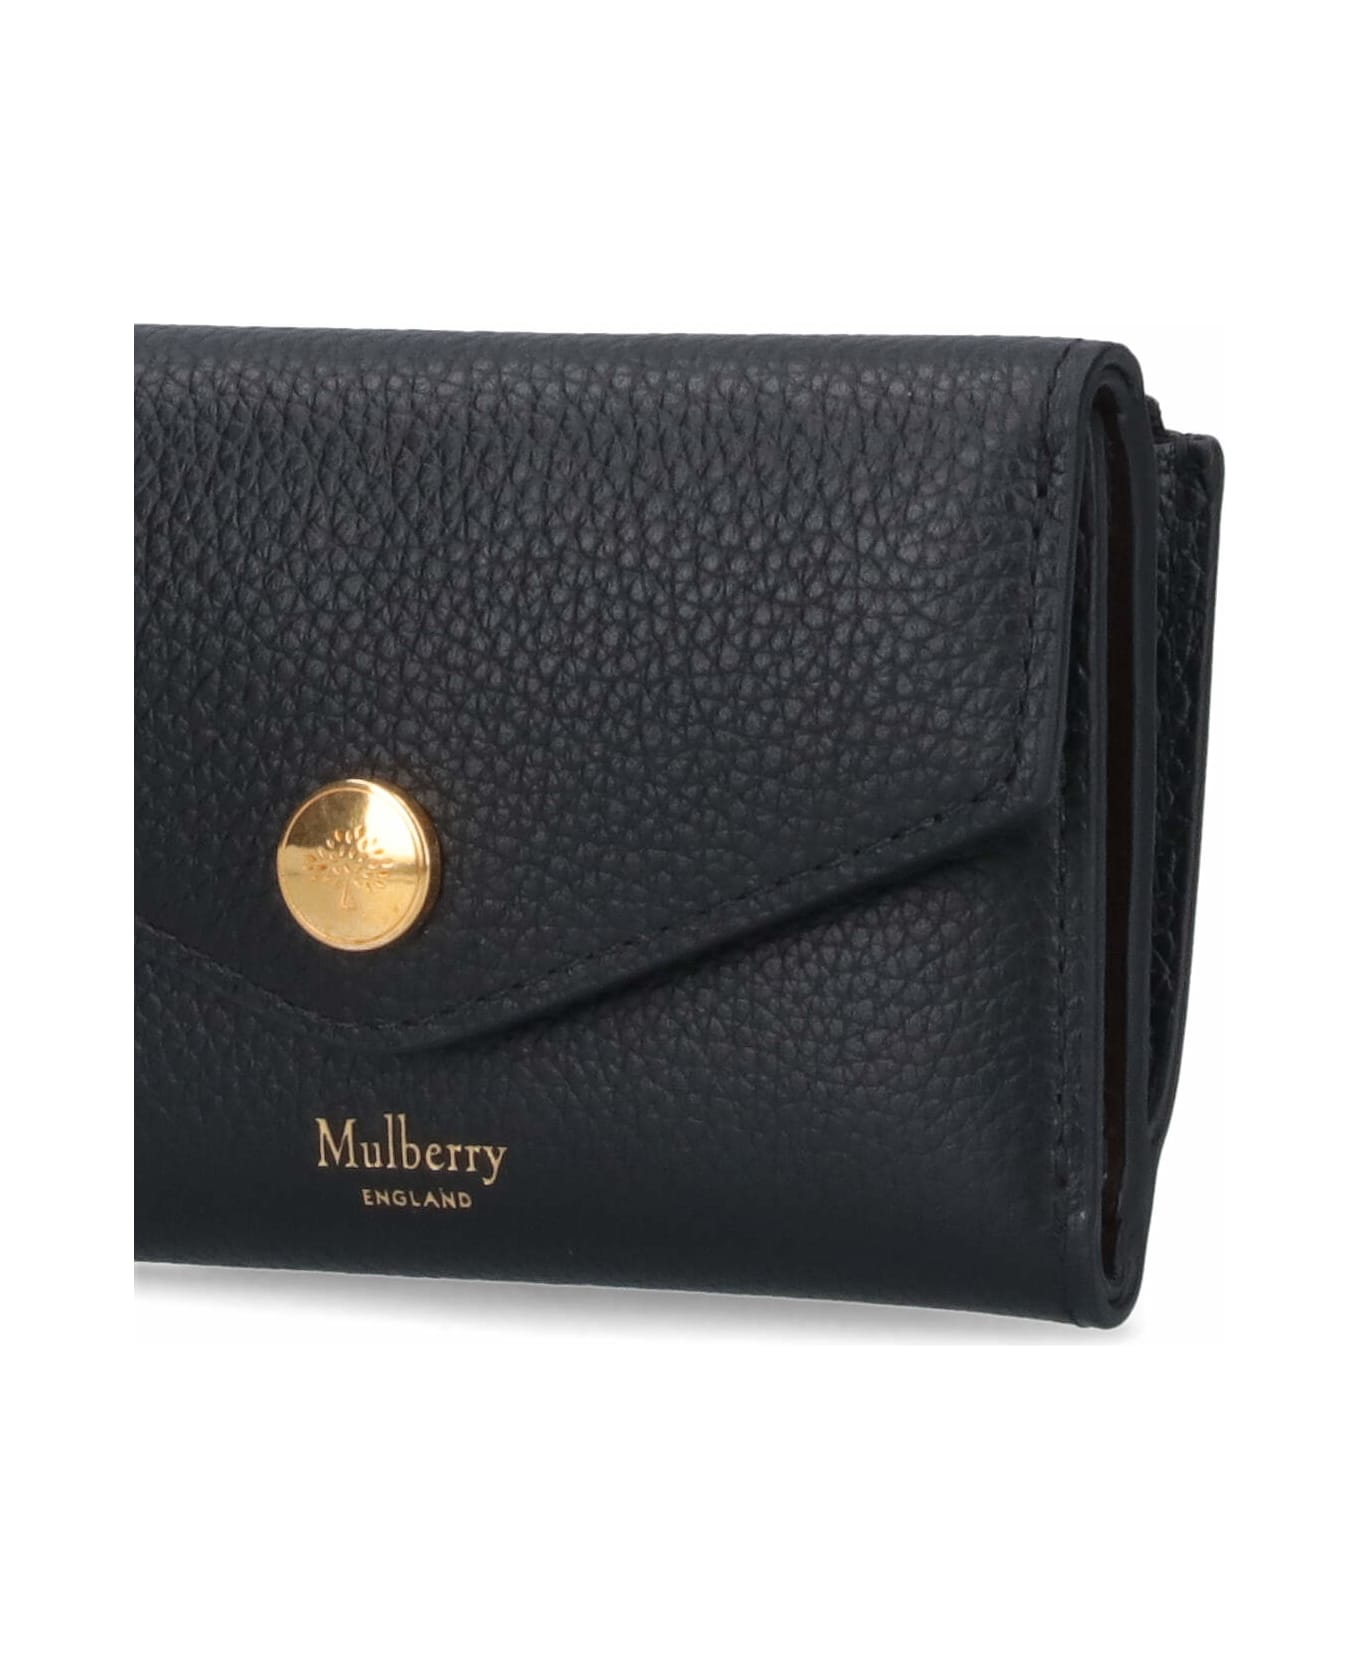 Mulberry 'folded Multi-card' Logo Wallet - Black   財布